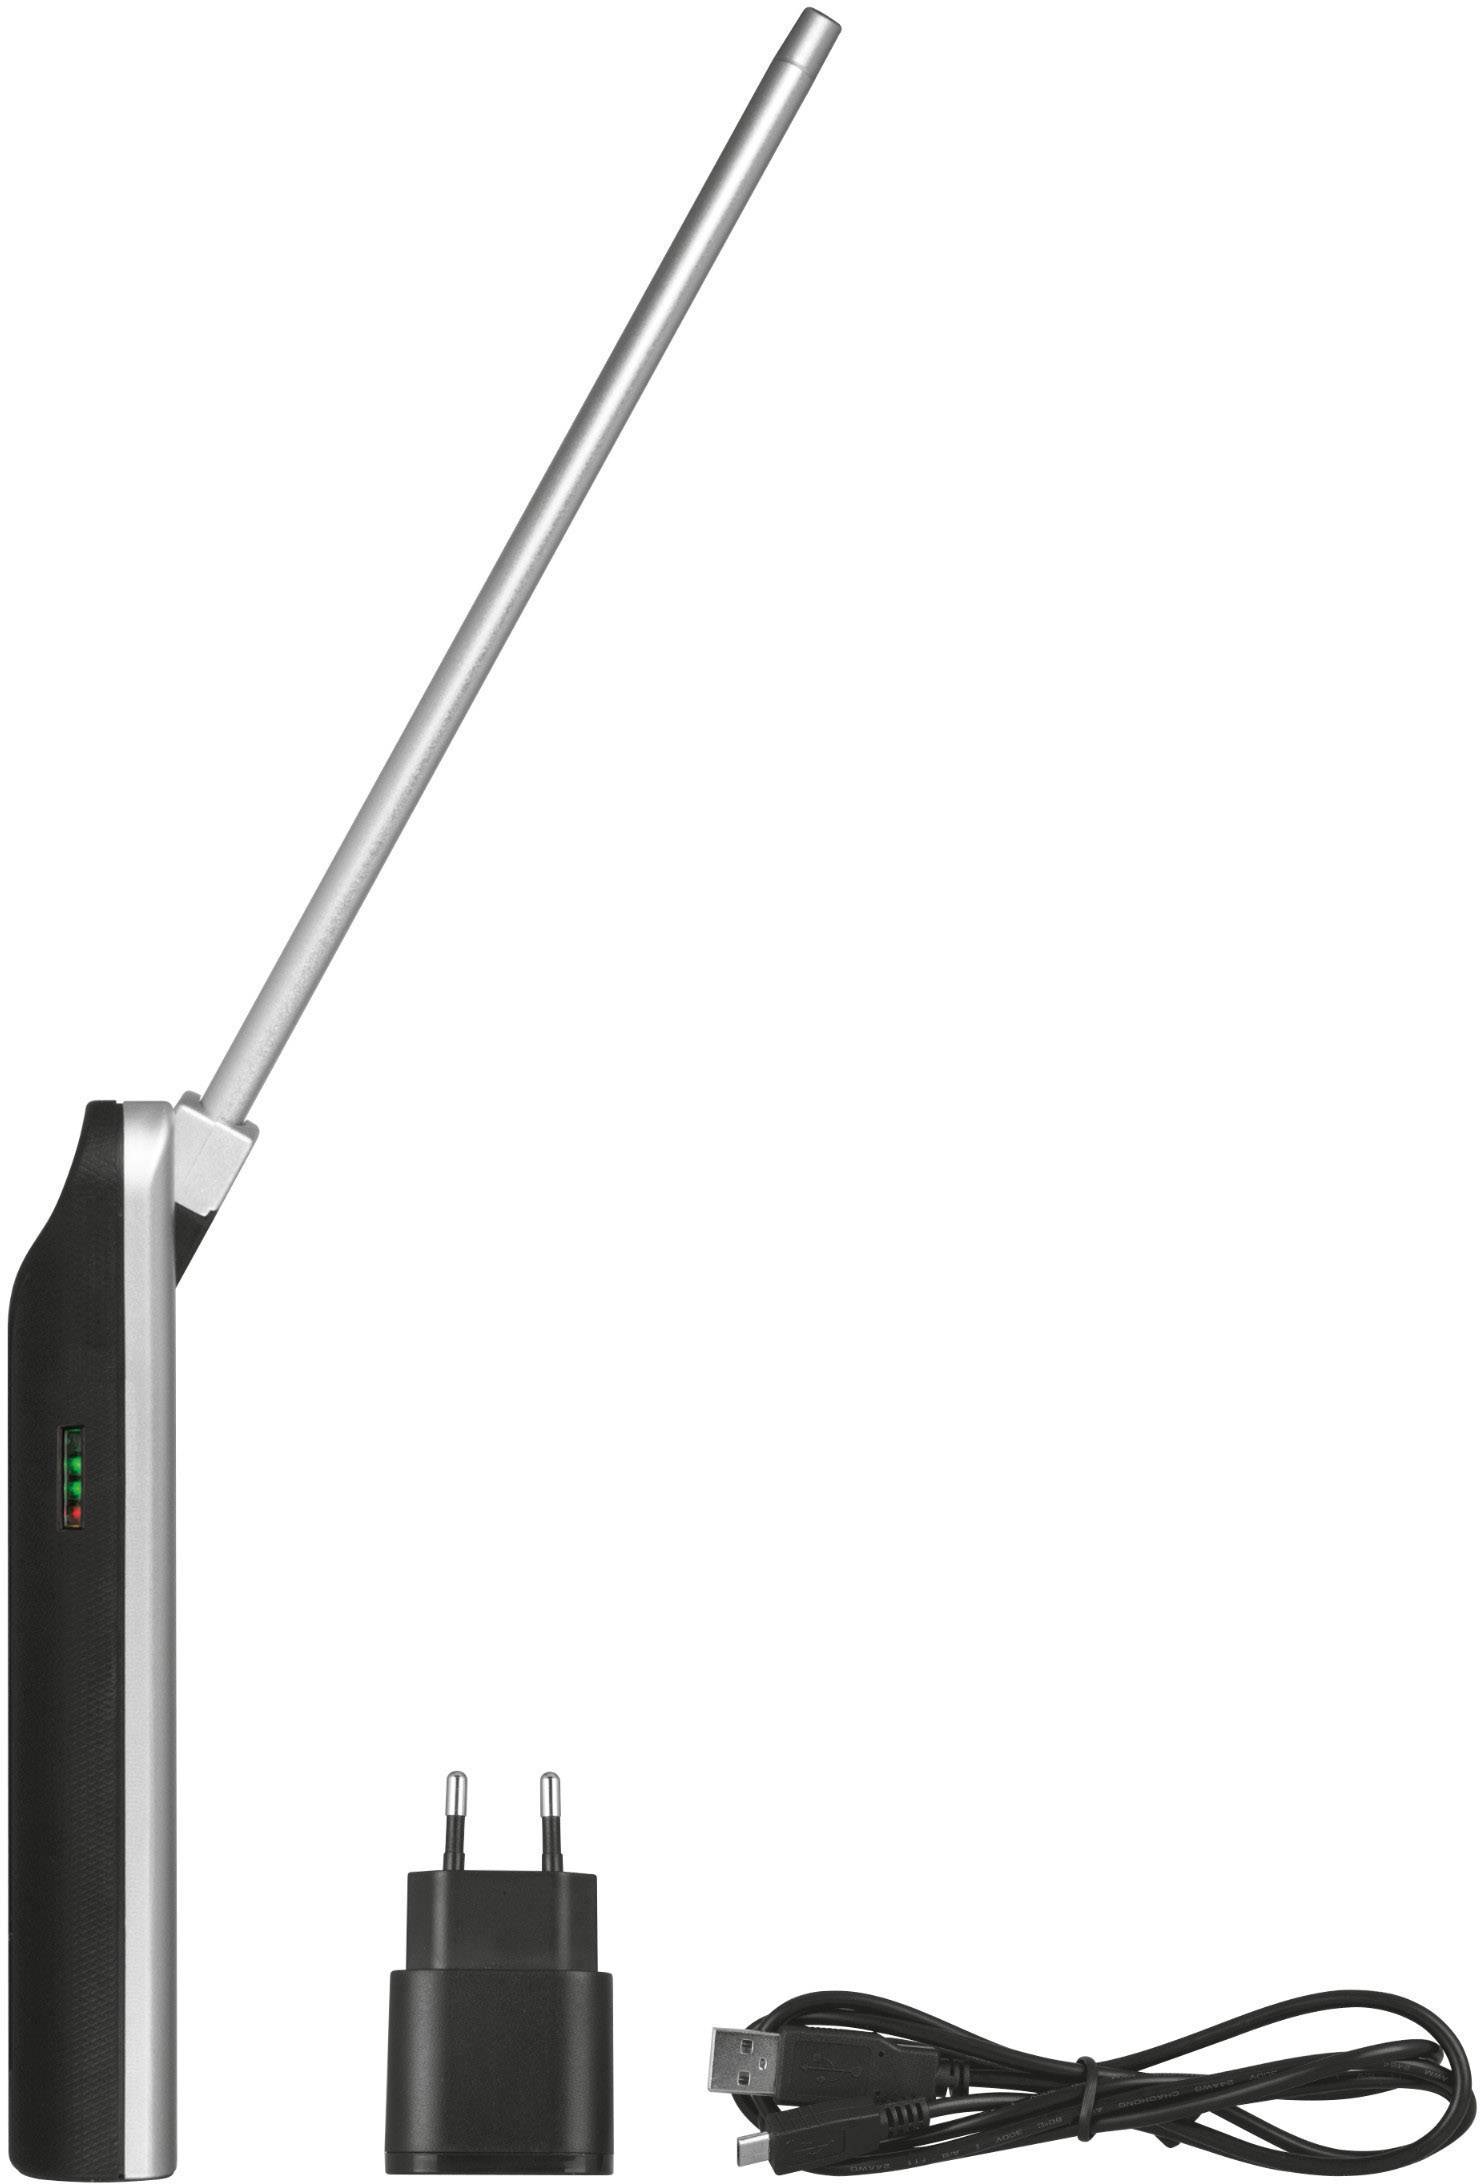 Osram LEDinspect Slimline 250 LEDIL206 Akku Inspektionsleuchte mit Magnet Lampe